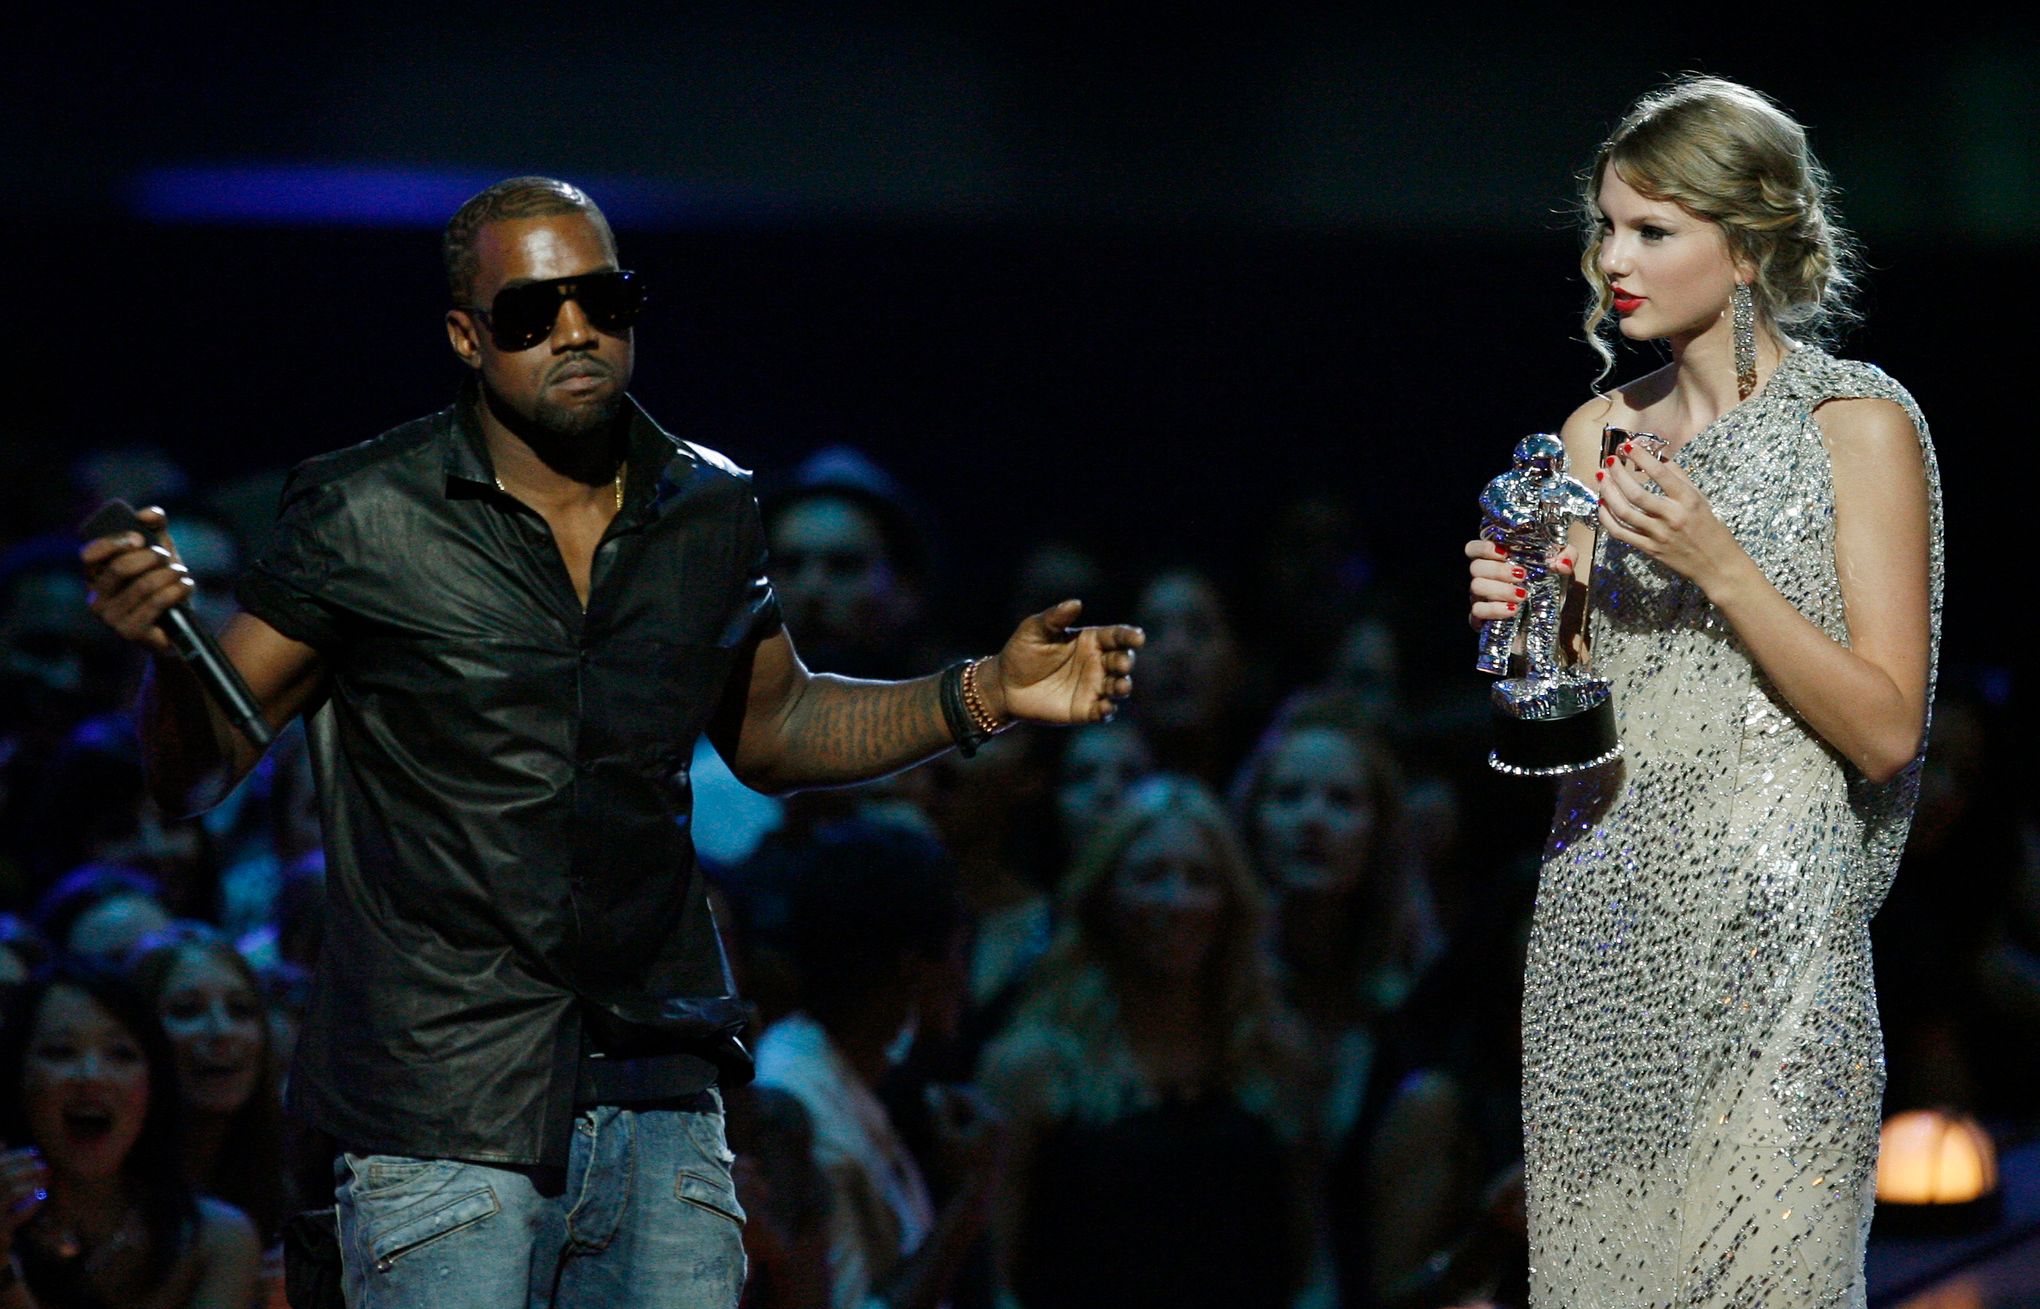 Inside Taylor Swift's Kim Kardashian and Kanye West Feud